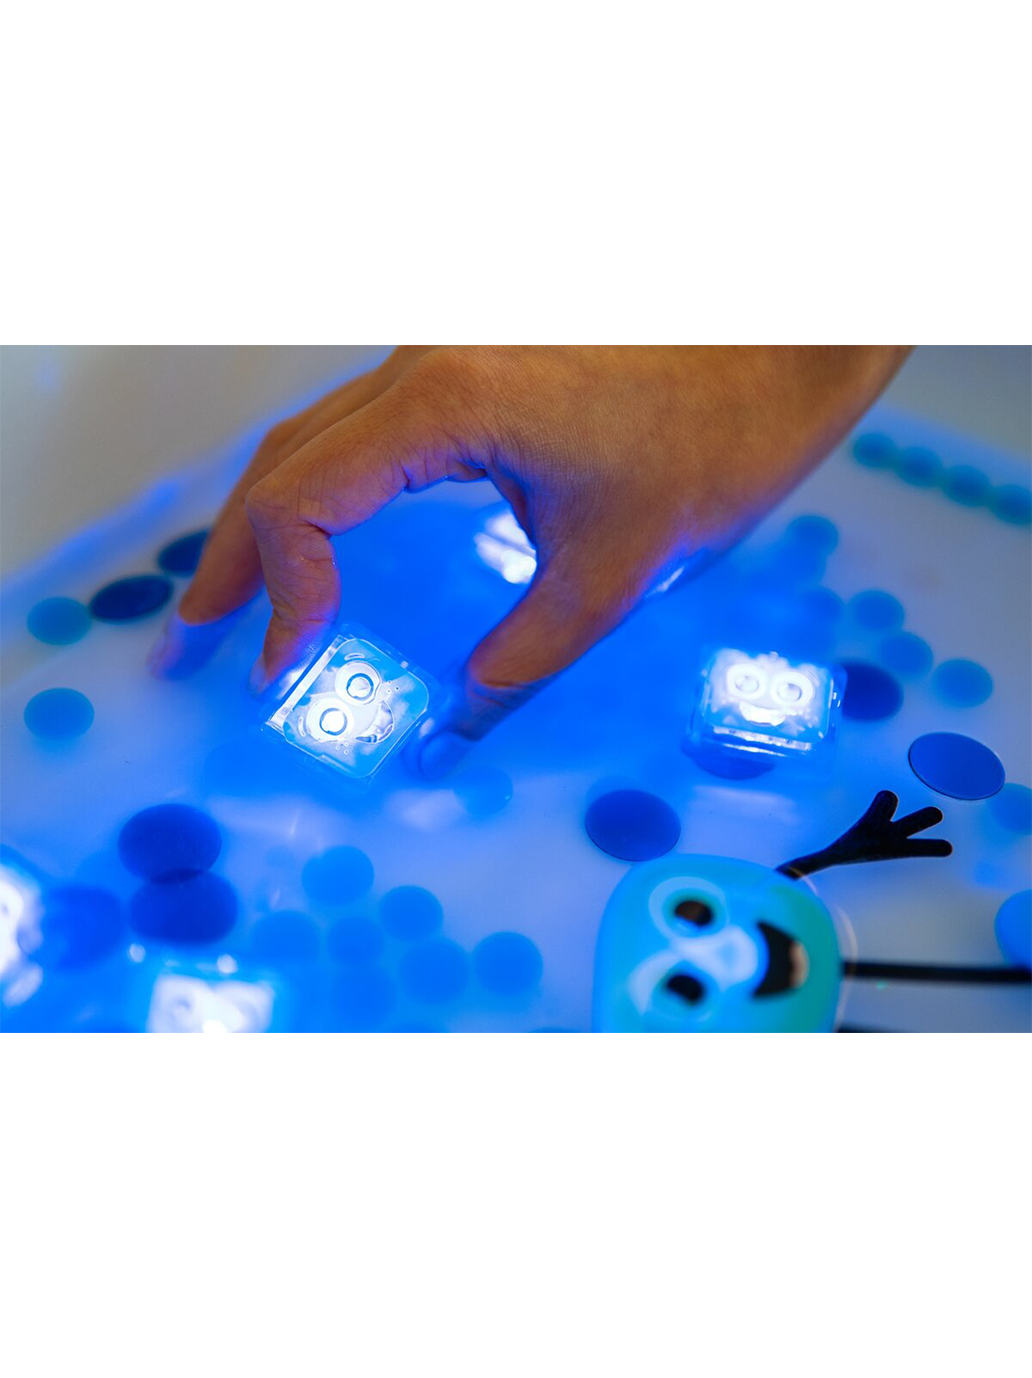 Juego sensorial de agua Cubos iluminados